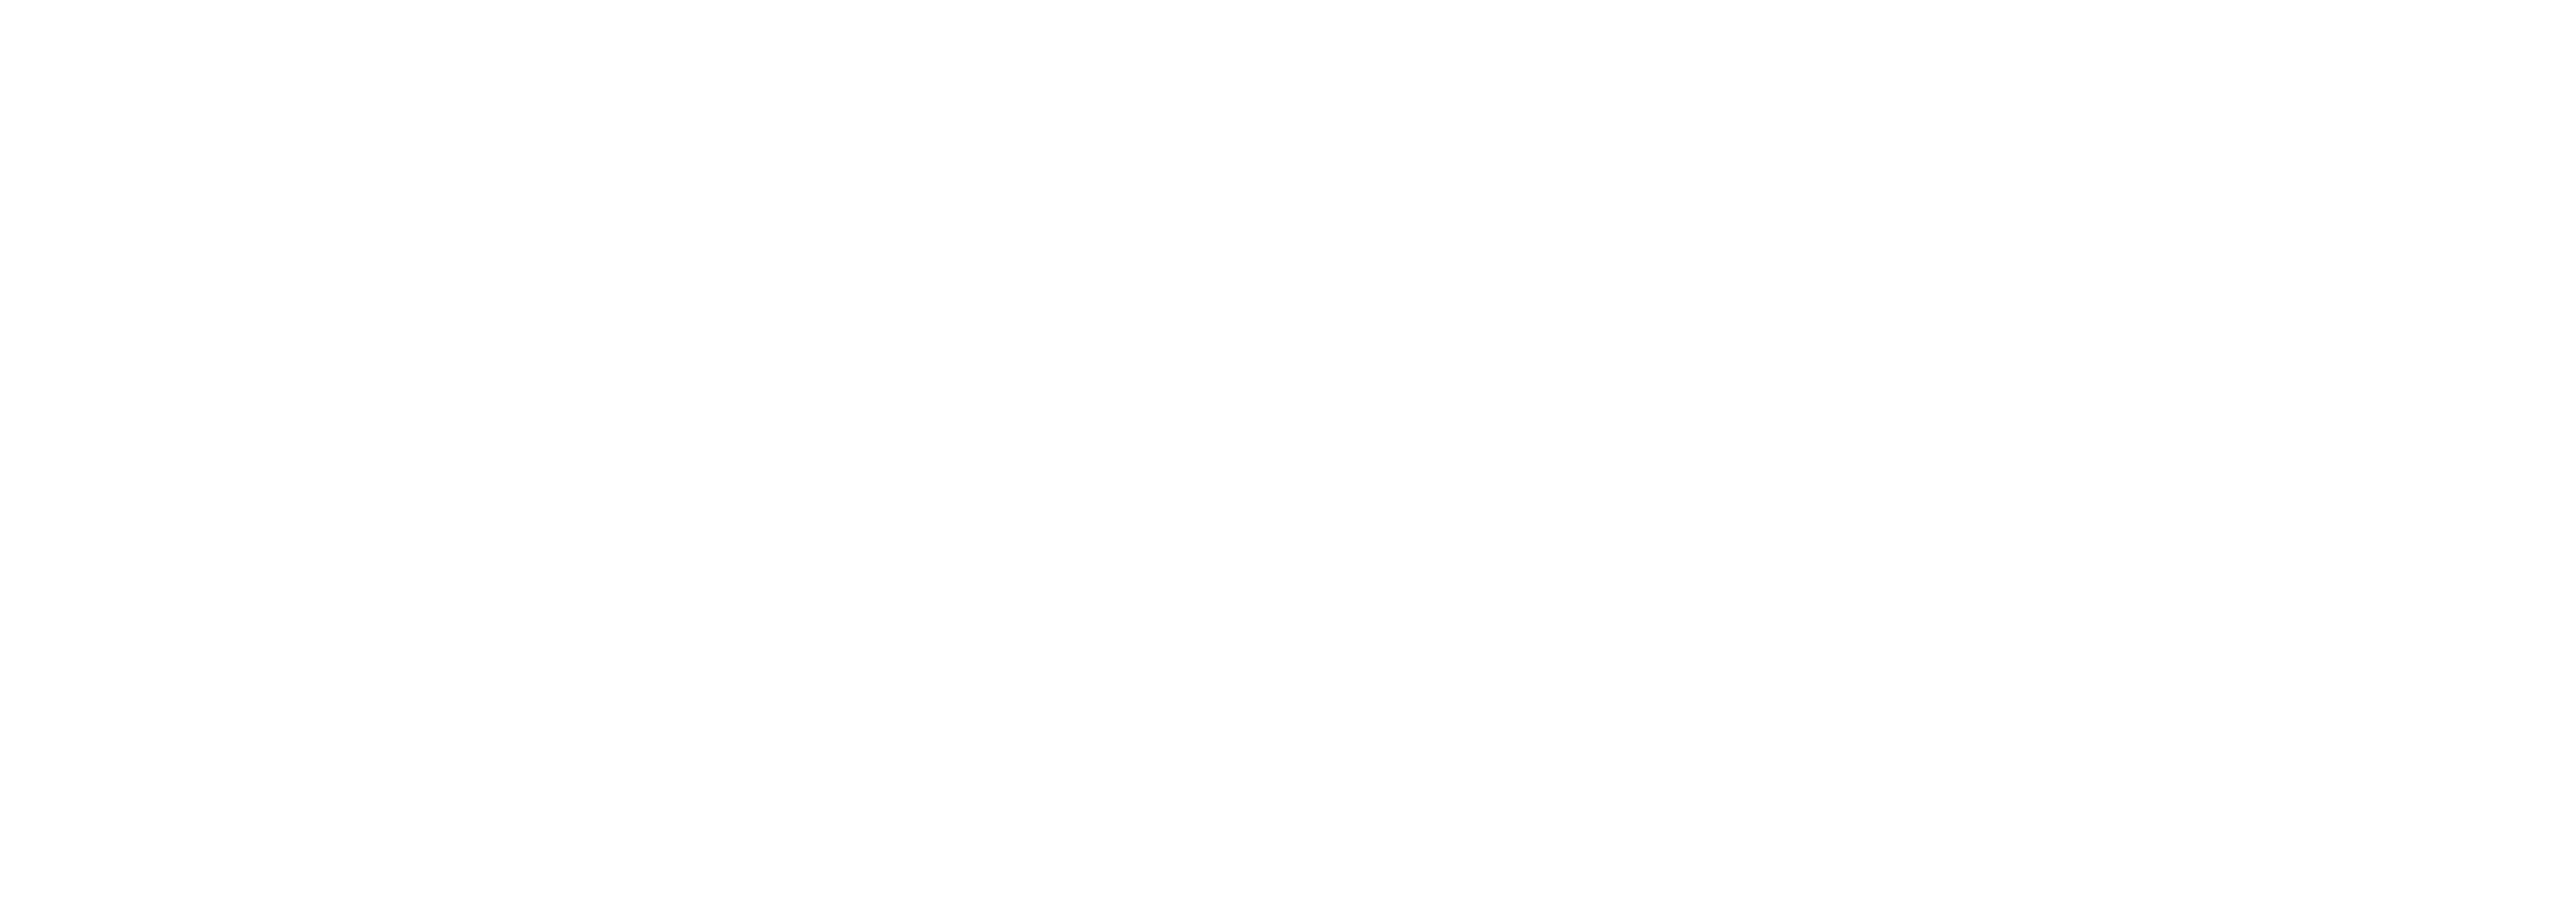 Fierce Marketing Services